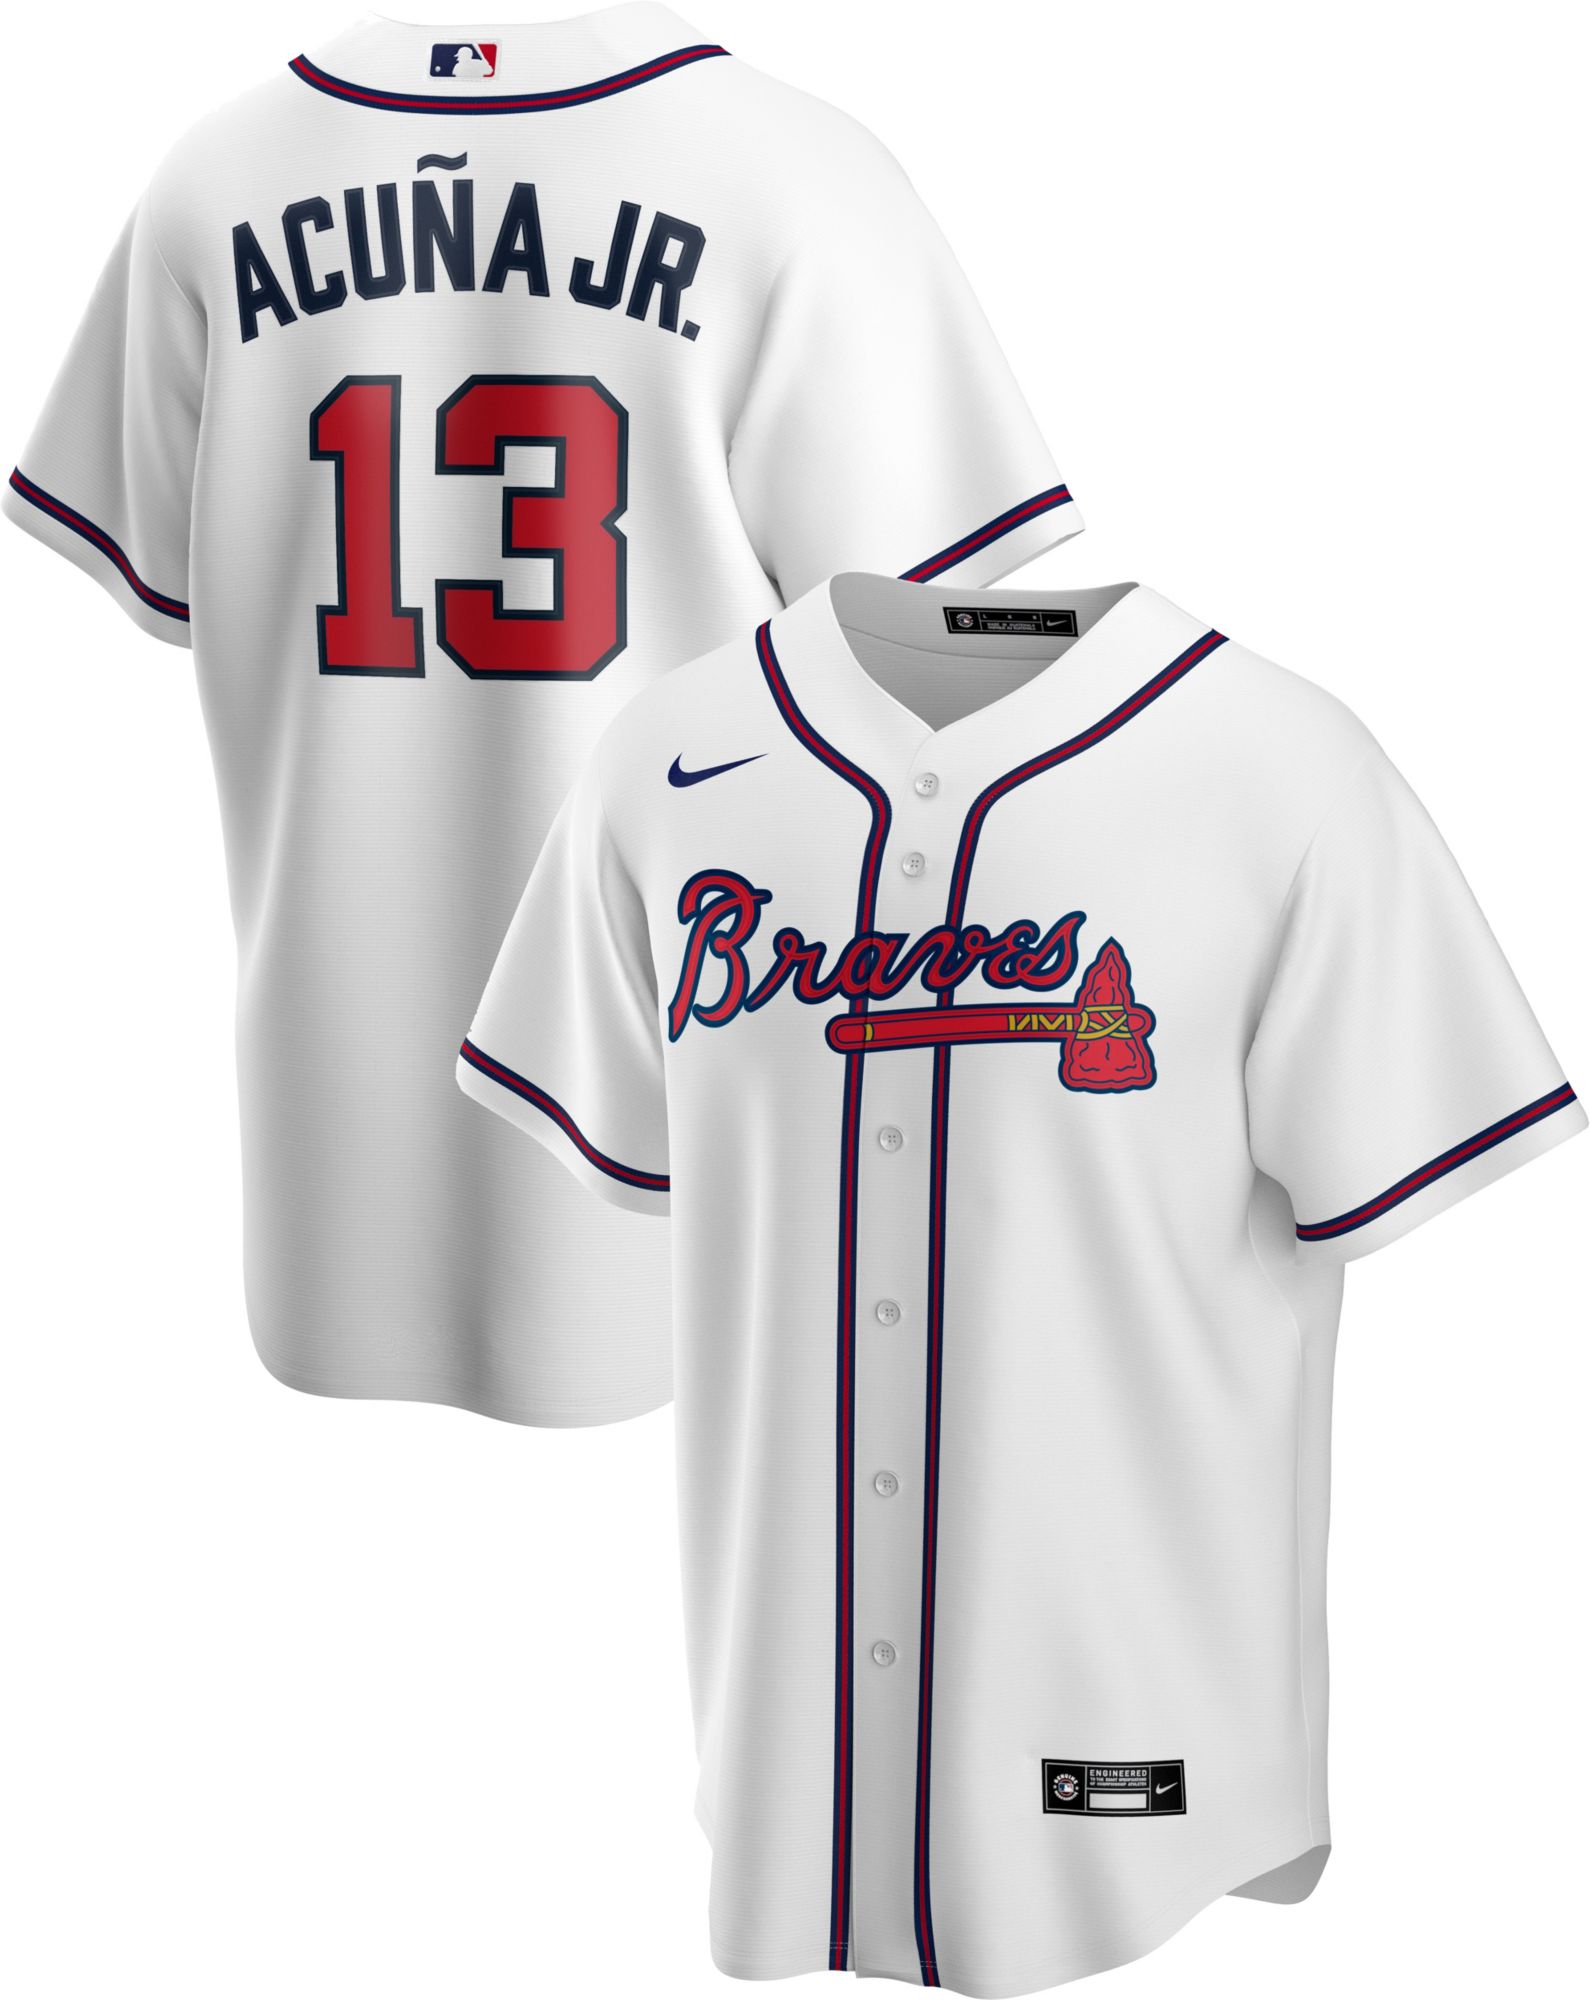 Personalized Atlanta Braves #13 Acuna JR. Baseball Jersey Shirt Fanmade  S-5XL